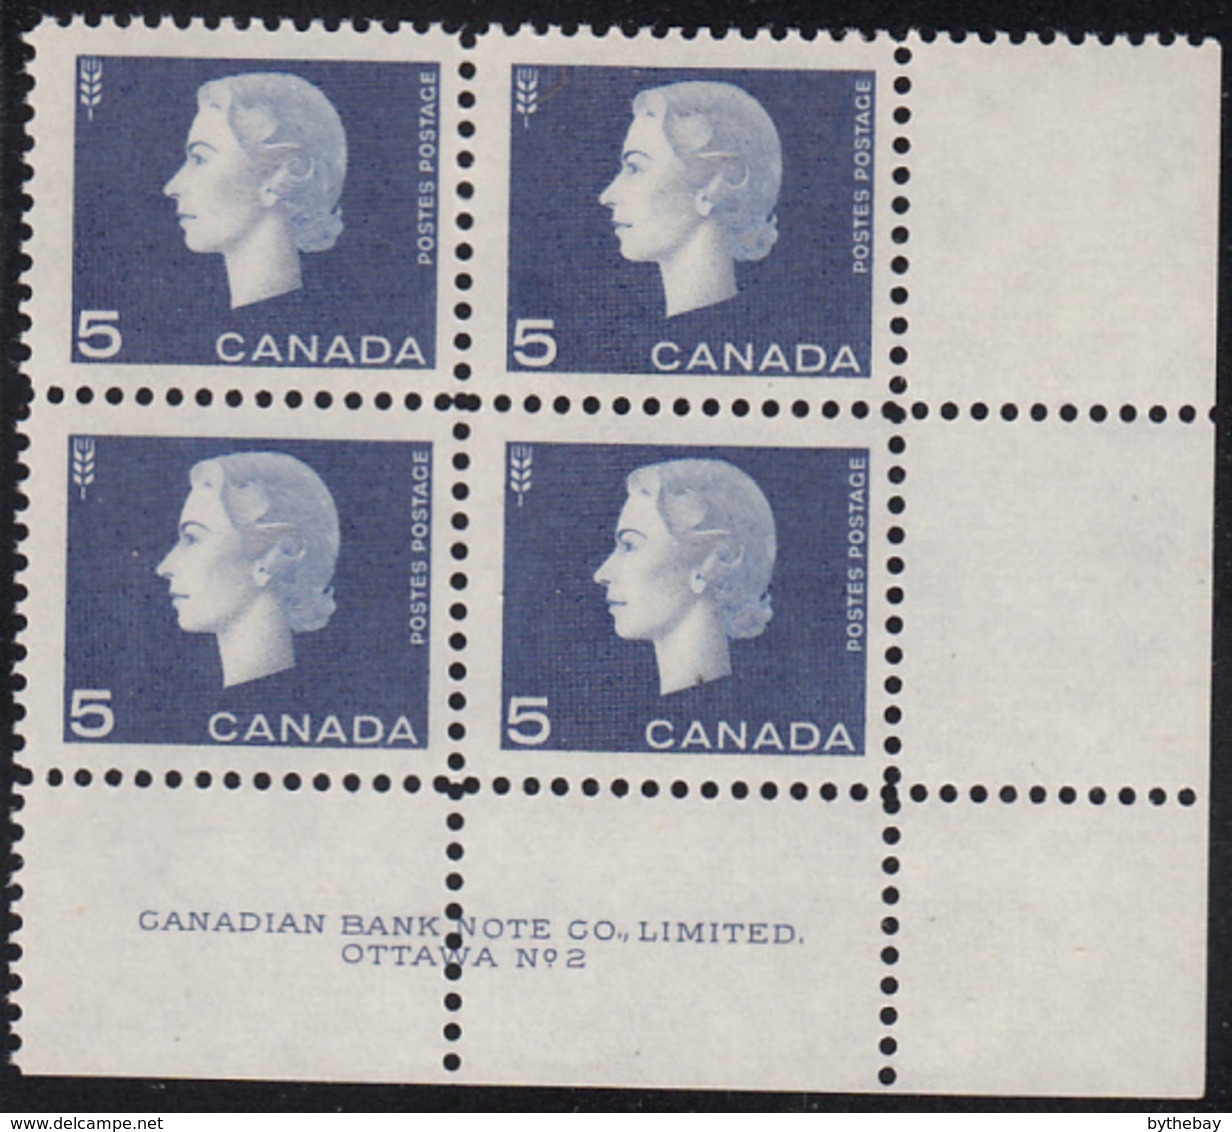 Canada 1962 MNH Sc #405 5c QEII Cameo Plate #2 LR - Num. Planches & Inscriptions Marge